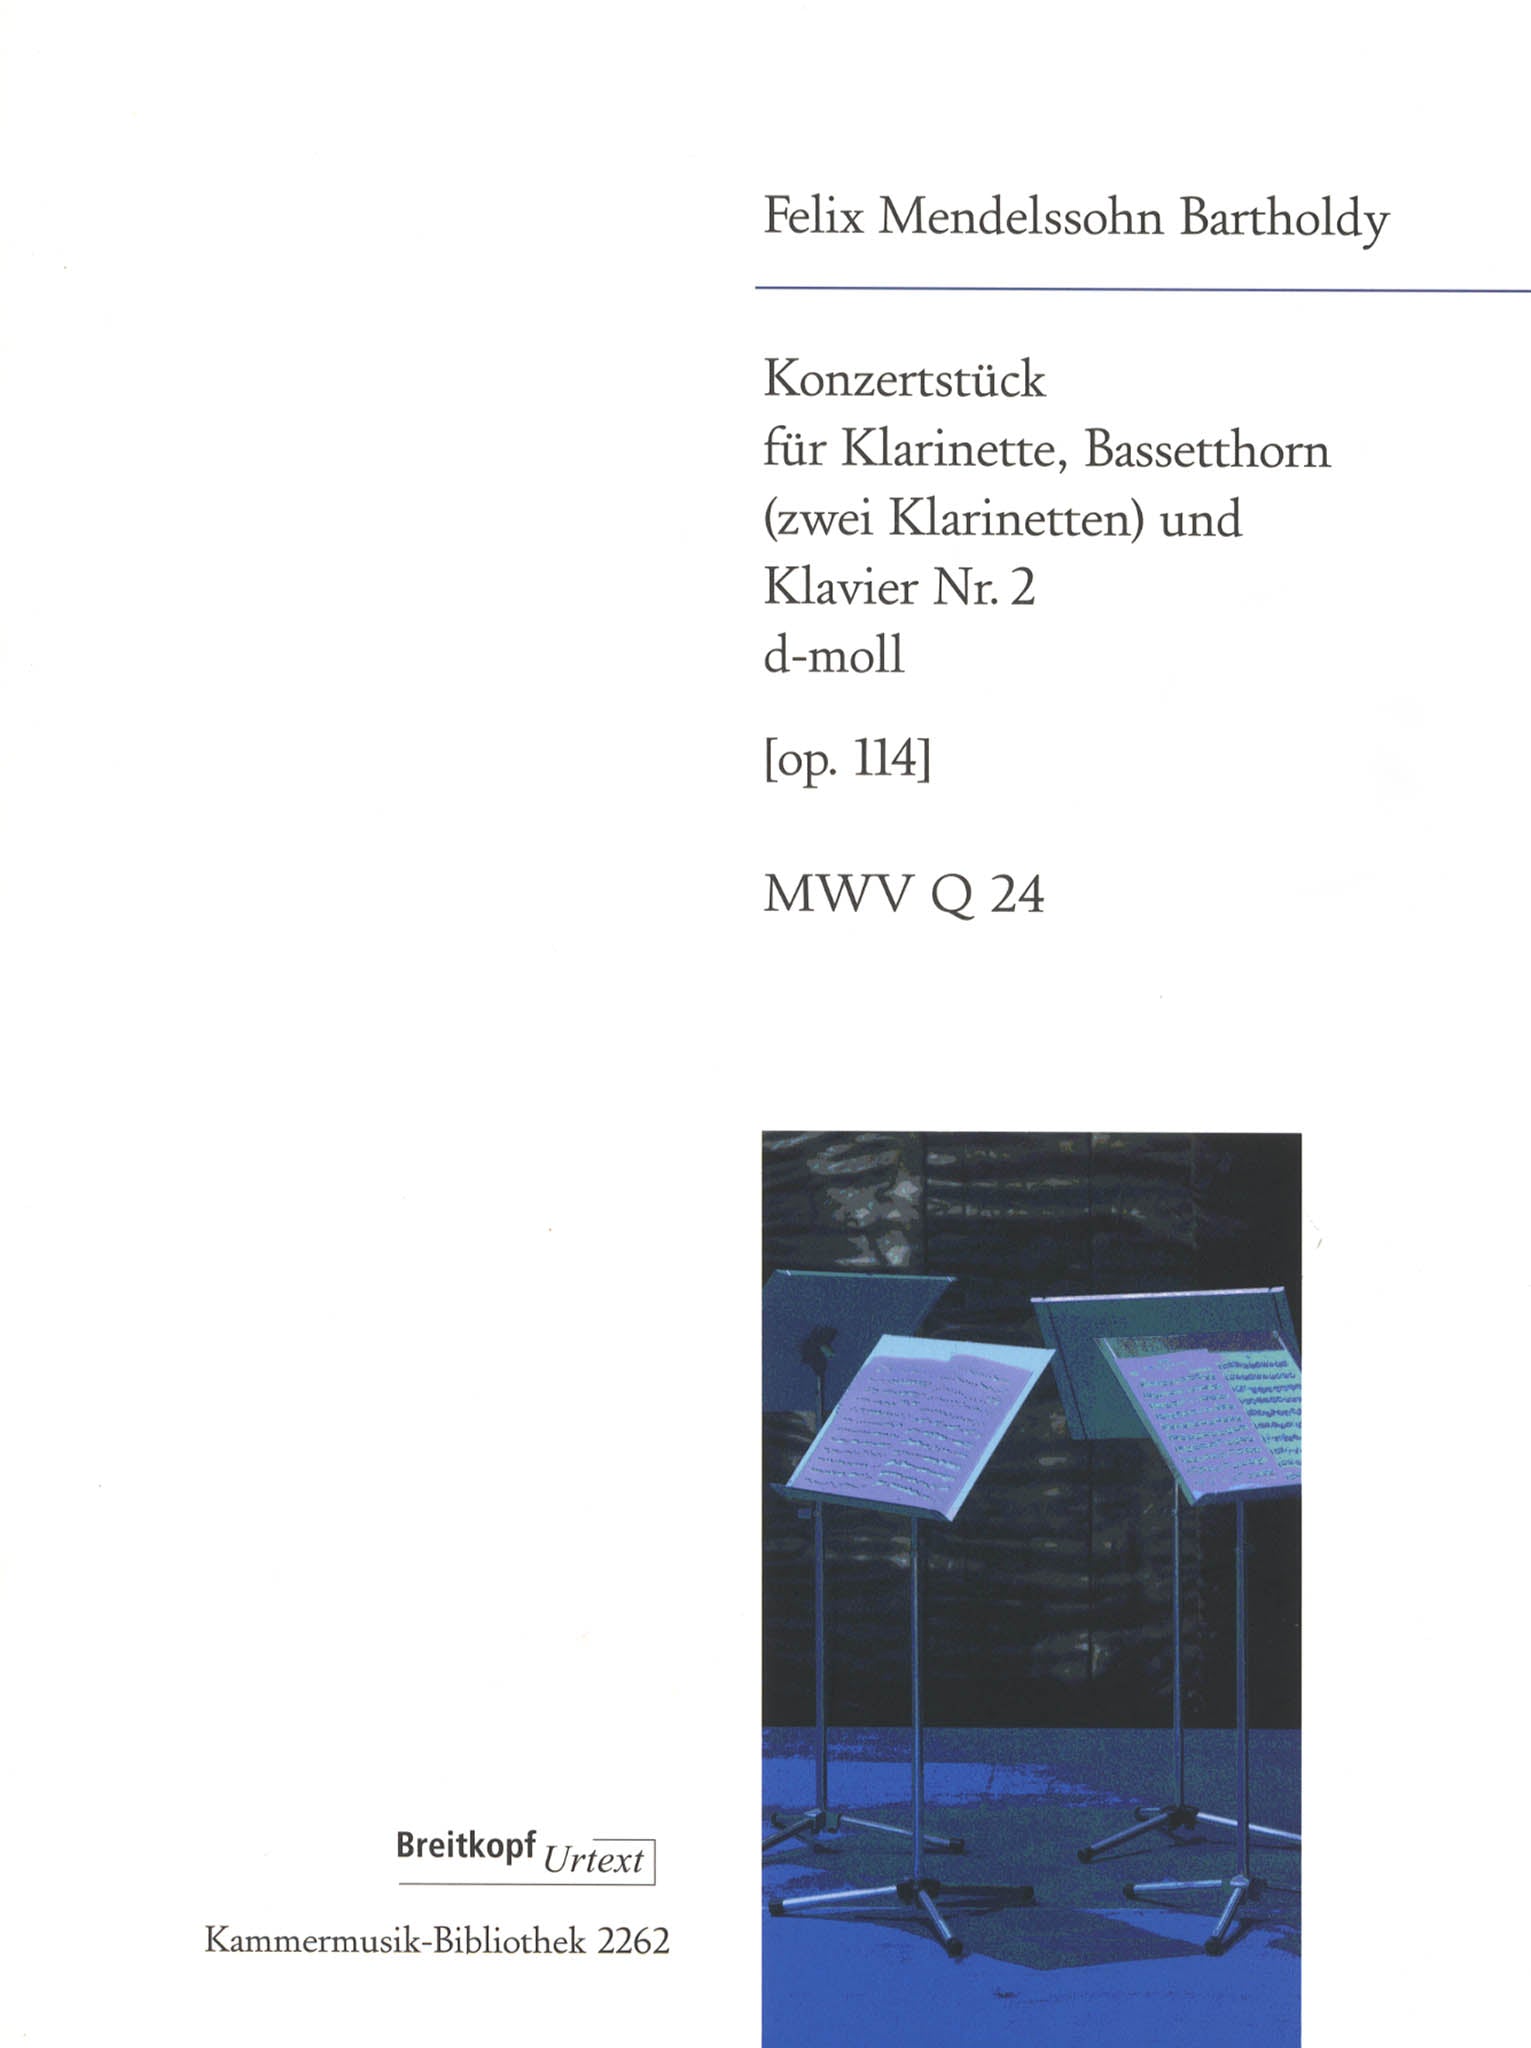 Concertpiece No. 2 in D Minor, Op. 114 Cover